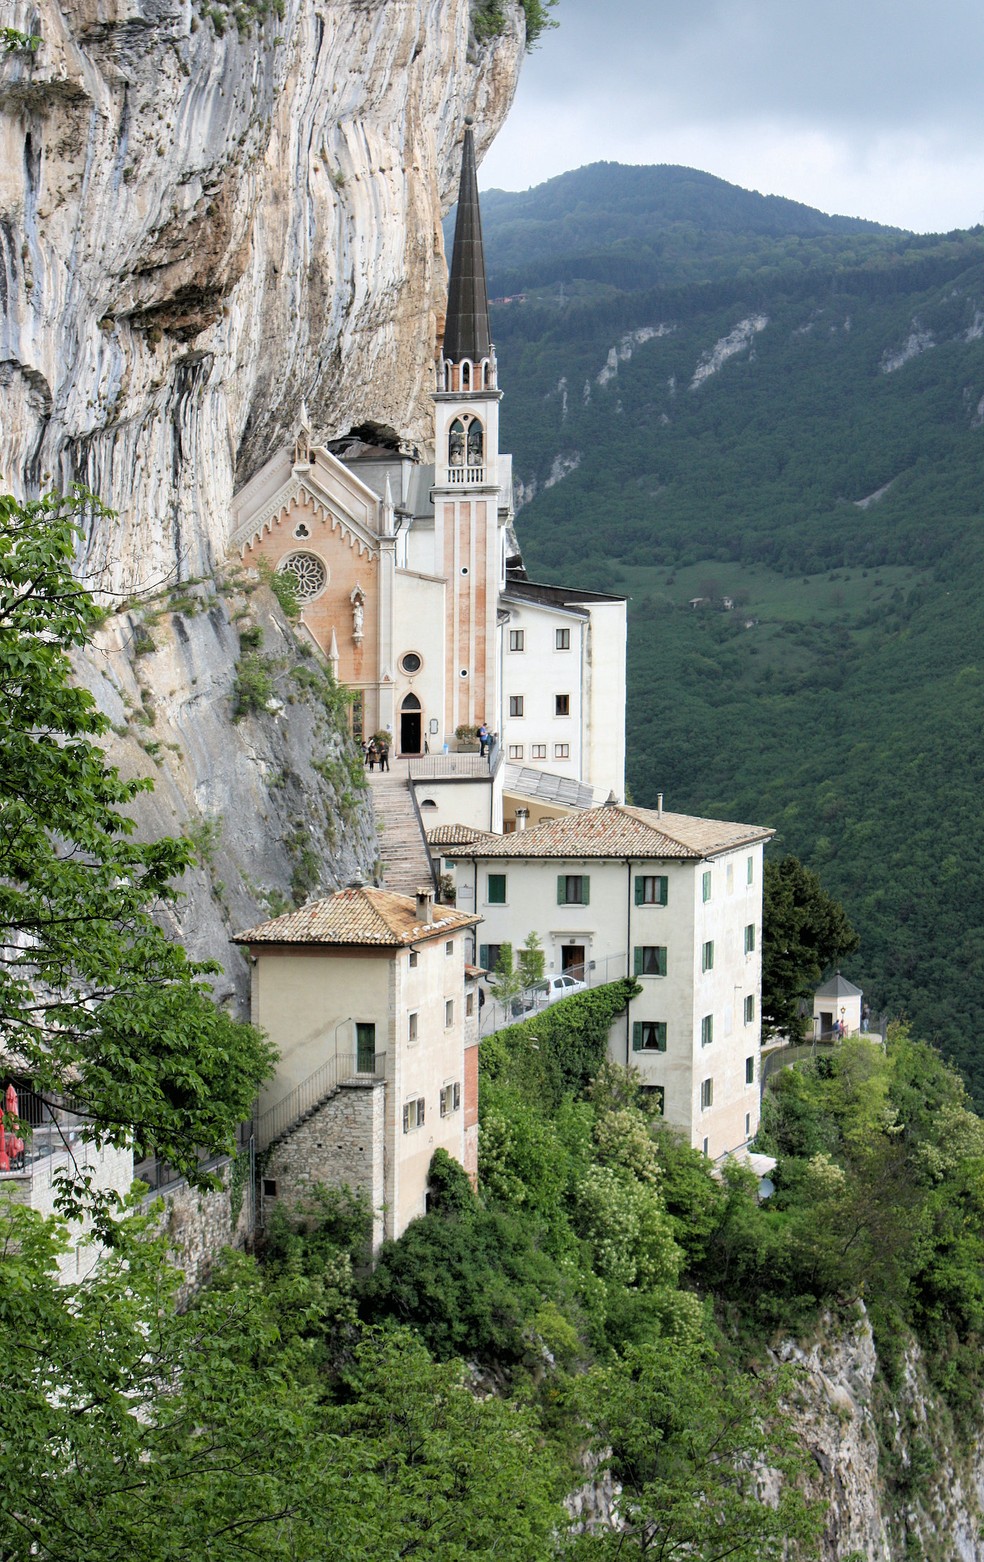 A igreja italiana Madonna della Corona fica em um penhasco a 775 m de altitude — Foto: Wikimedia / Dguendel / Creative Commons